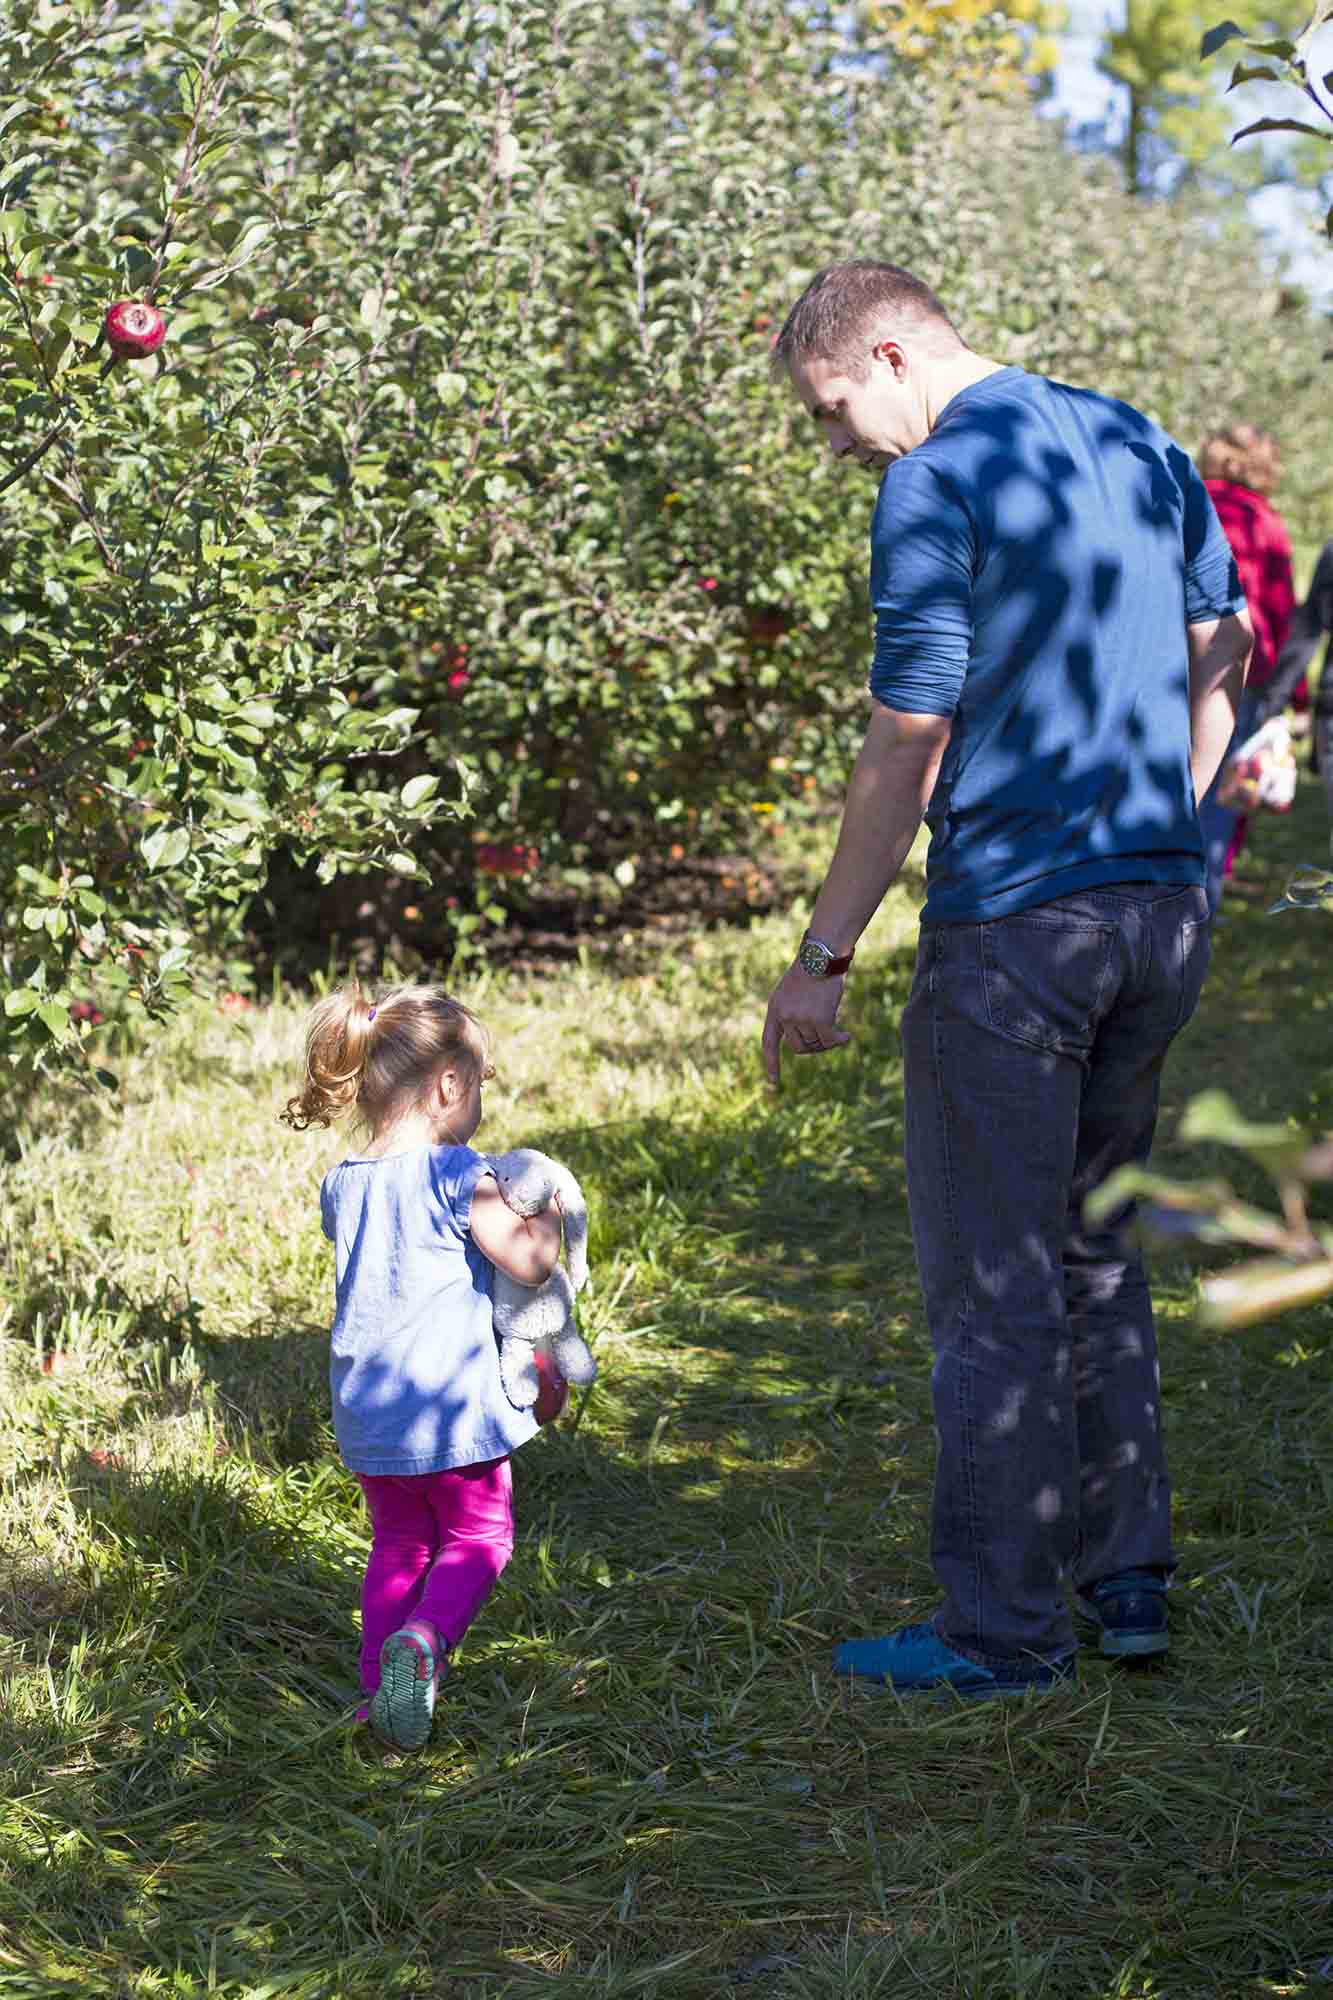 Avery at the Apple Orchard | www.girlversusdough.com @girlversusdough